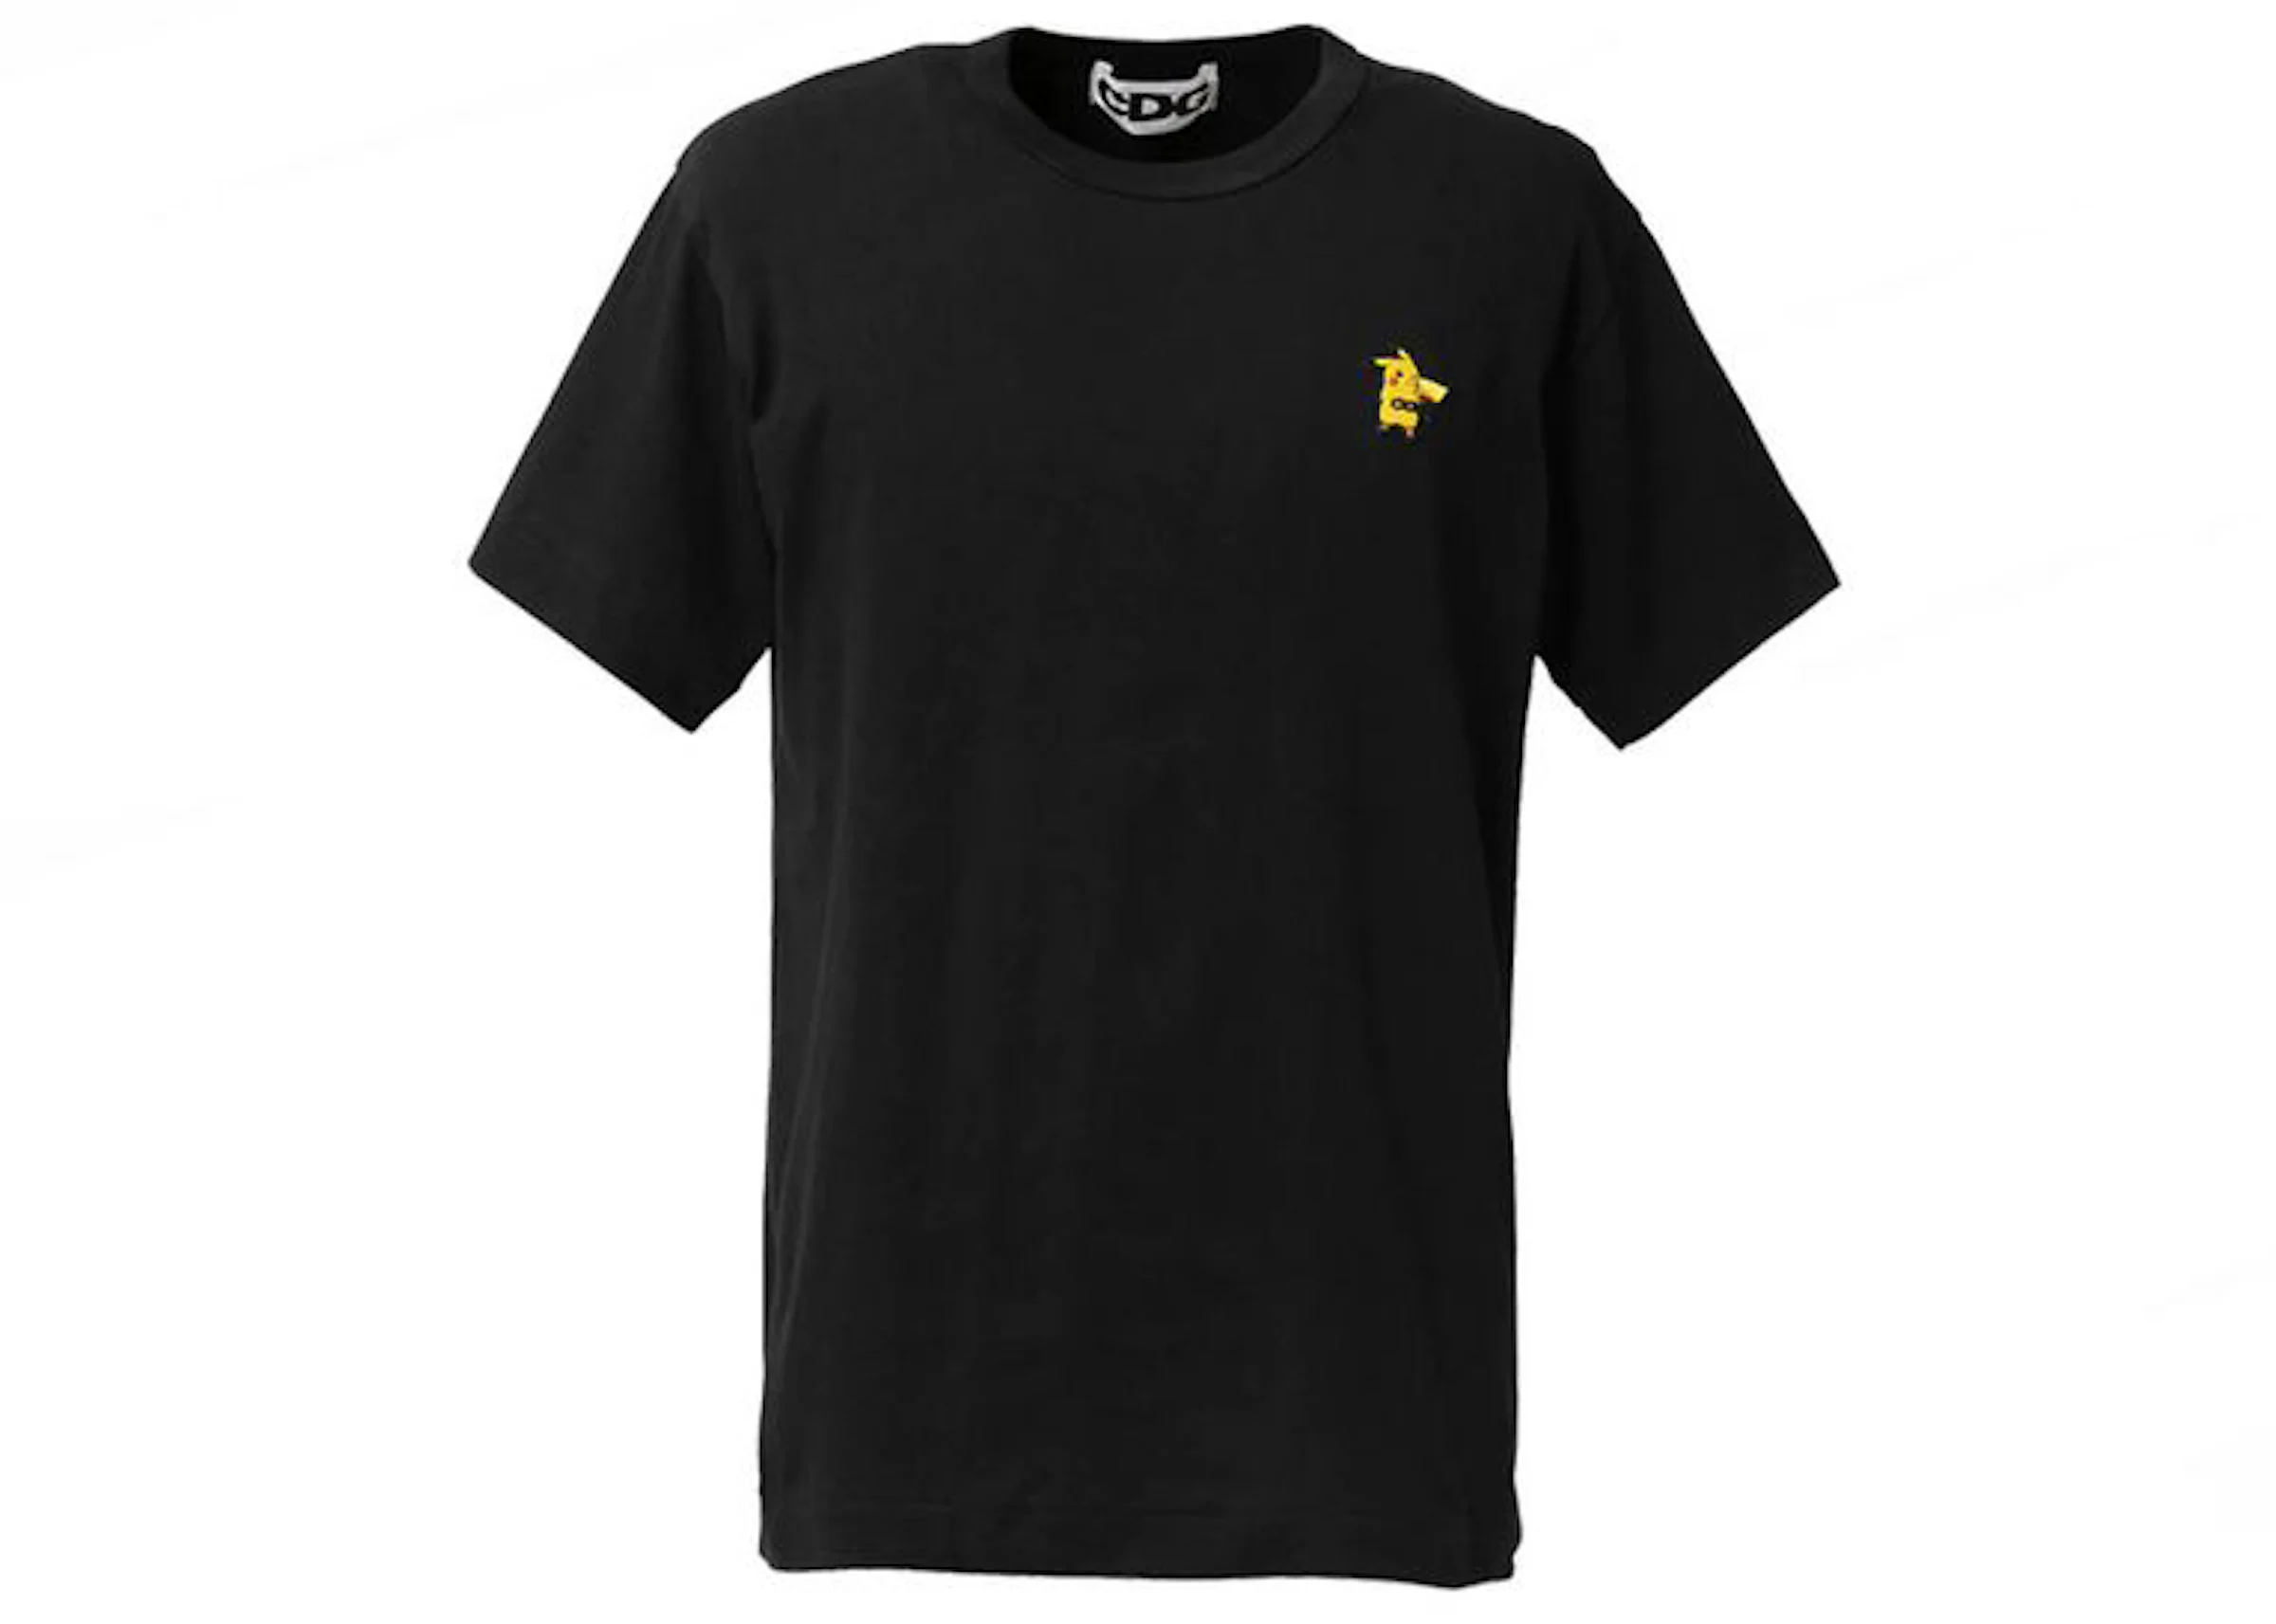 Fendi x FRGMT x Pokemon T-shirt Black